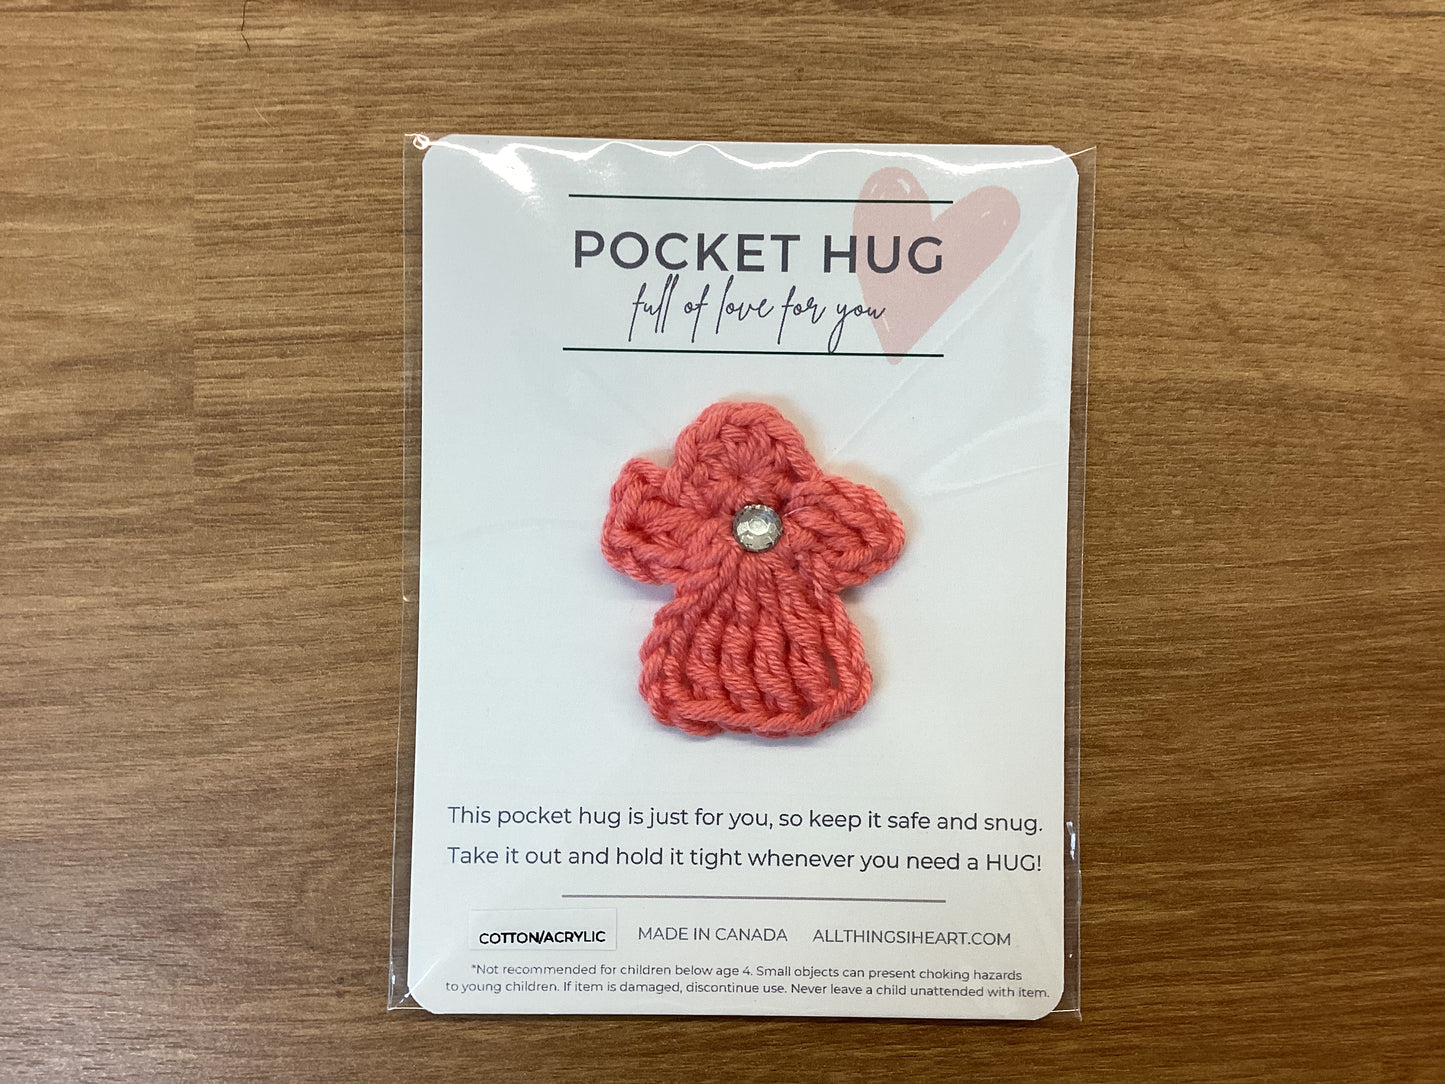 All Things I Heart- Pocket Hug